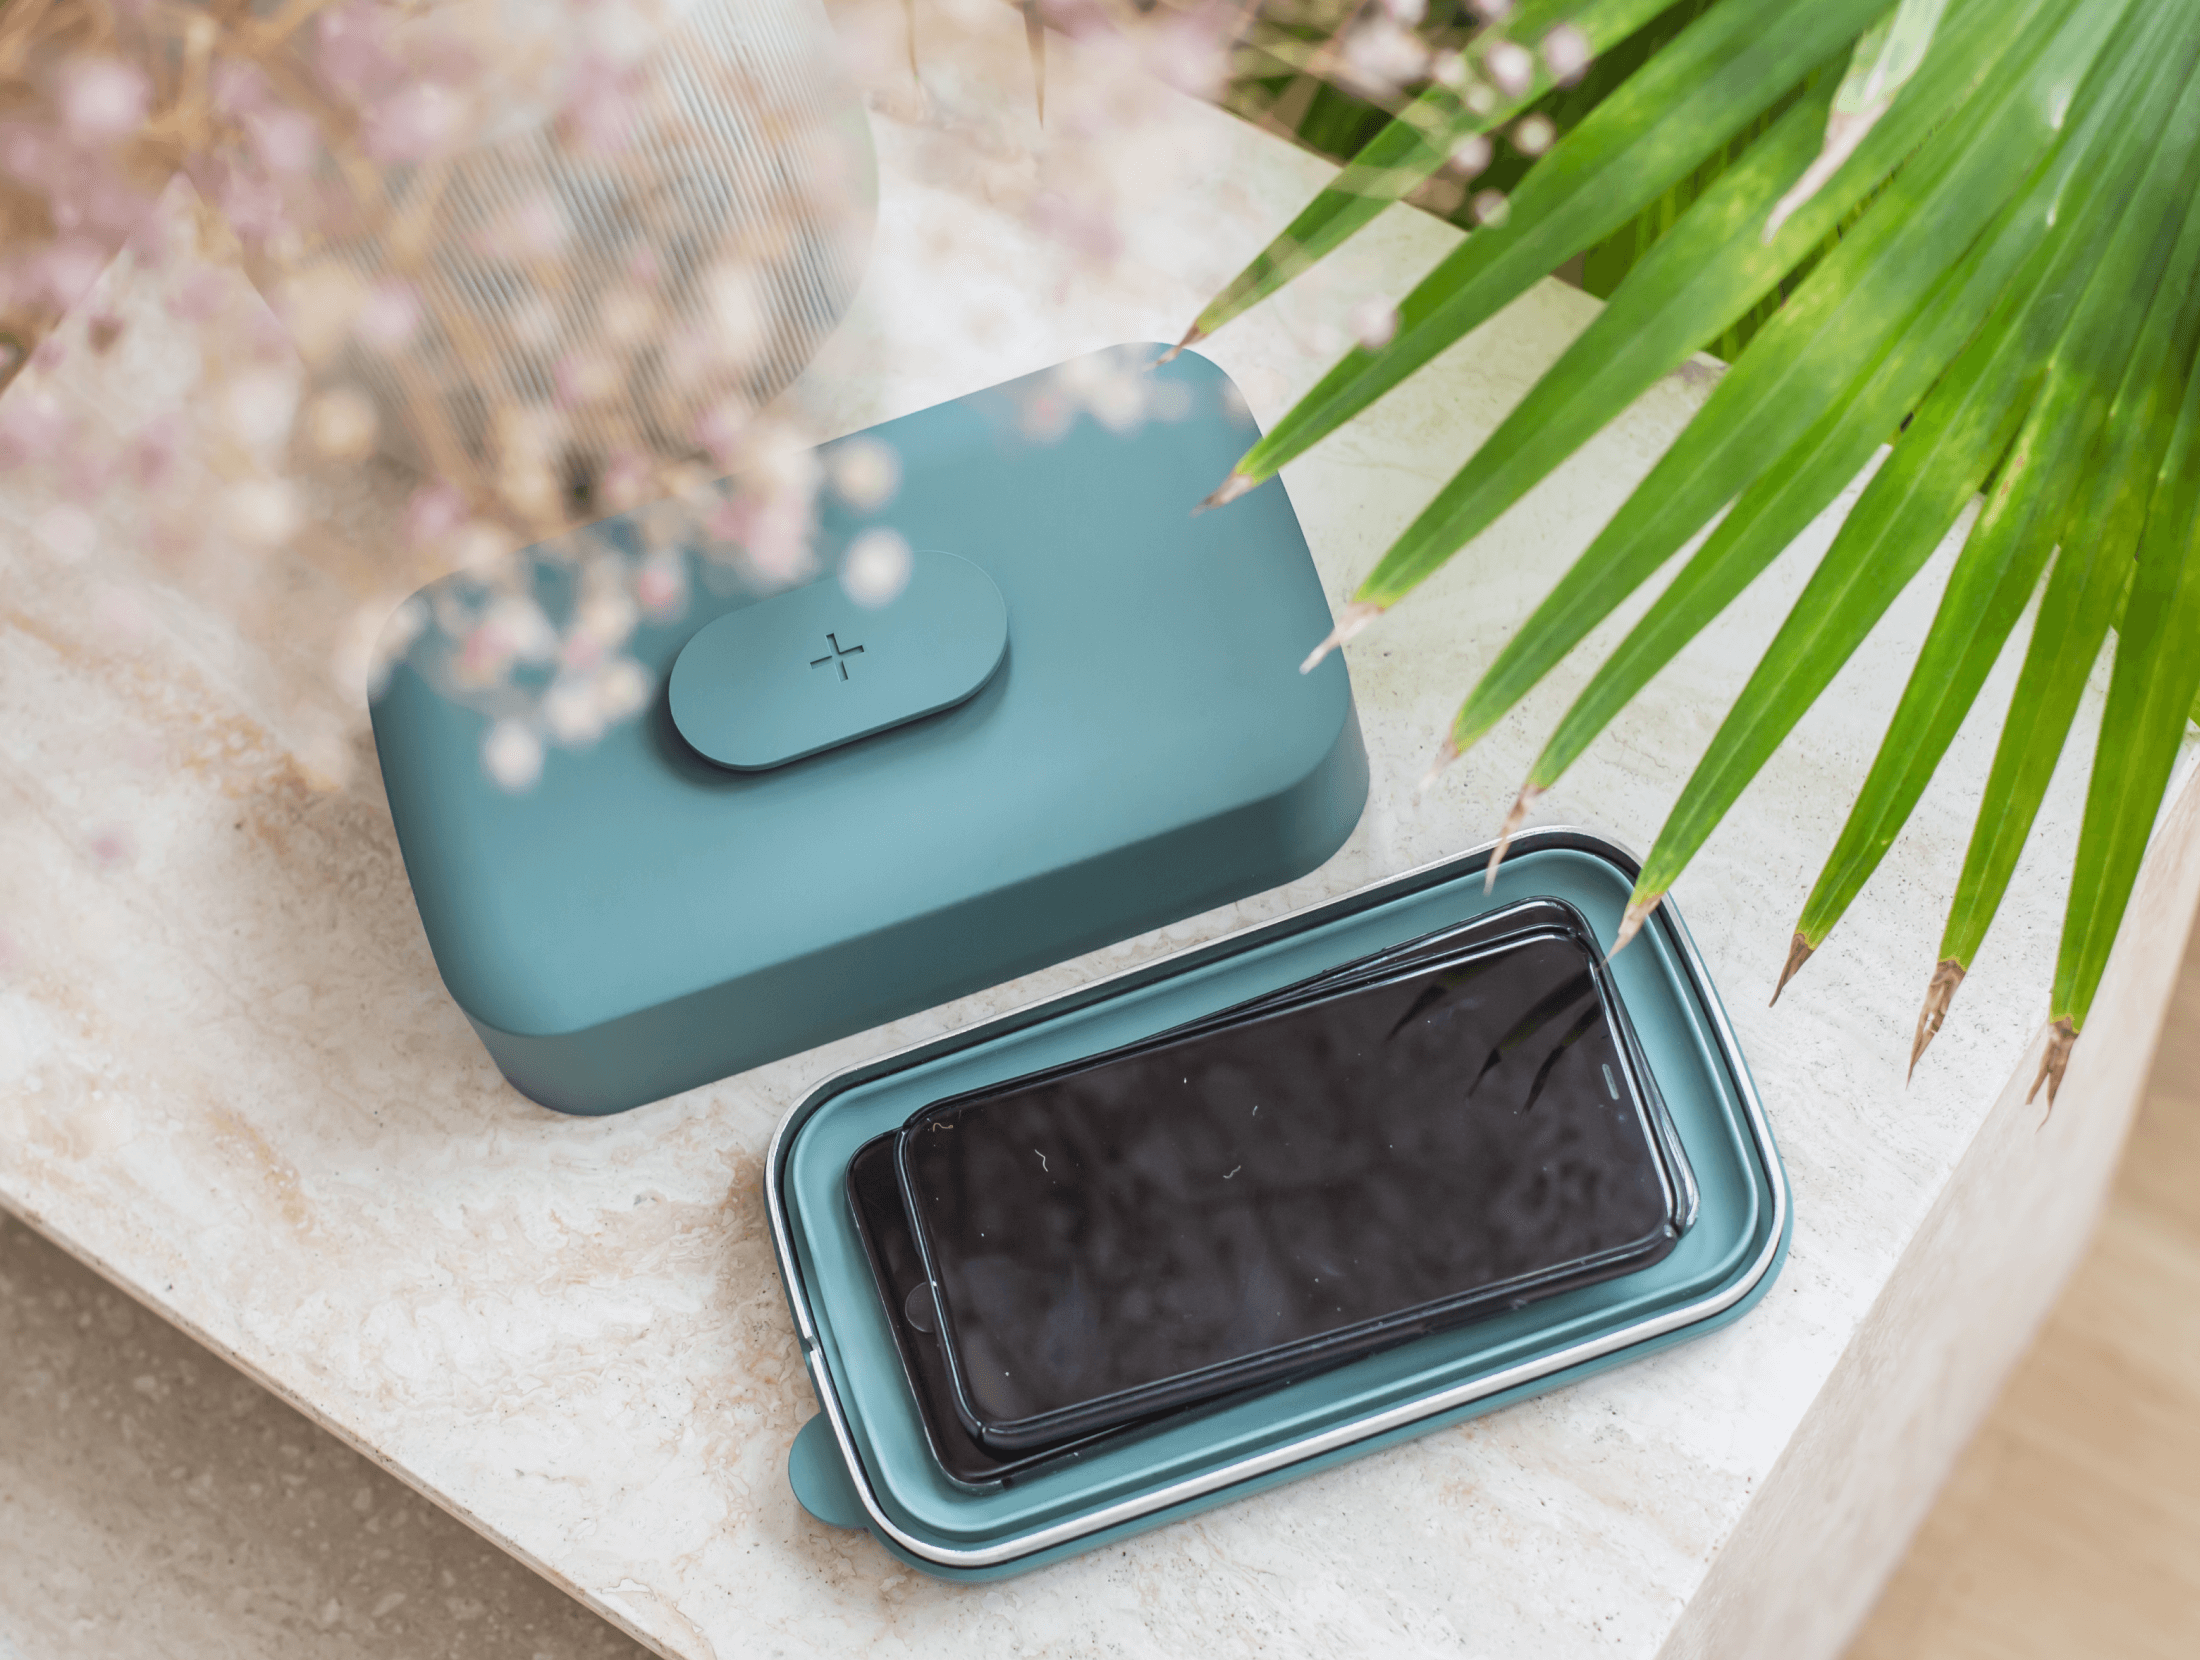 Stolp® Phone Box Faraday Cage, Classic Emerald Classic Emerald